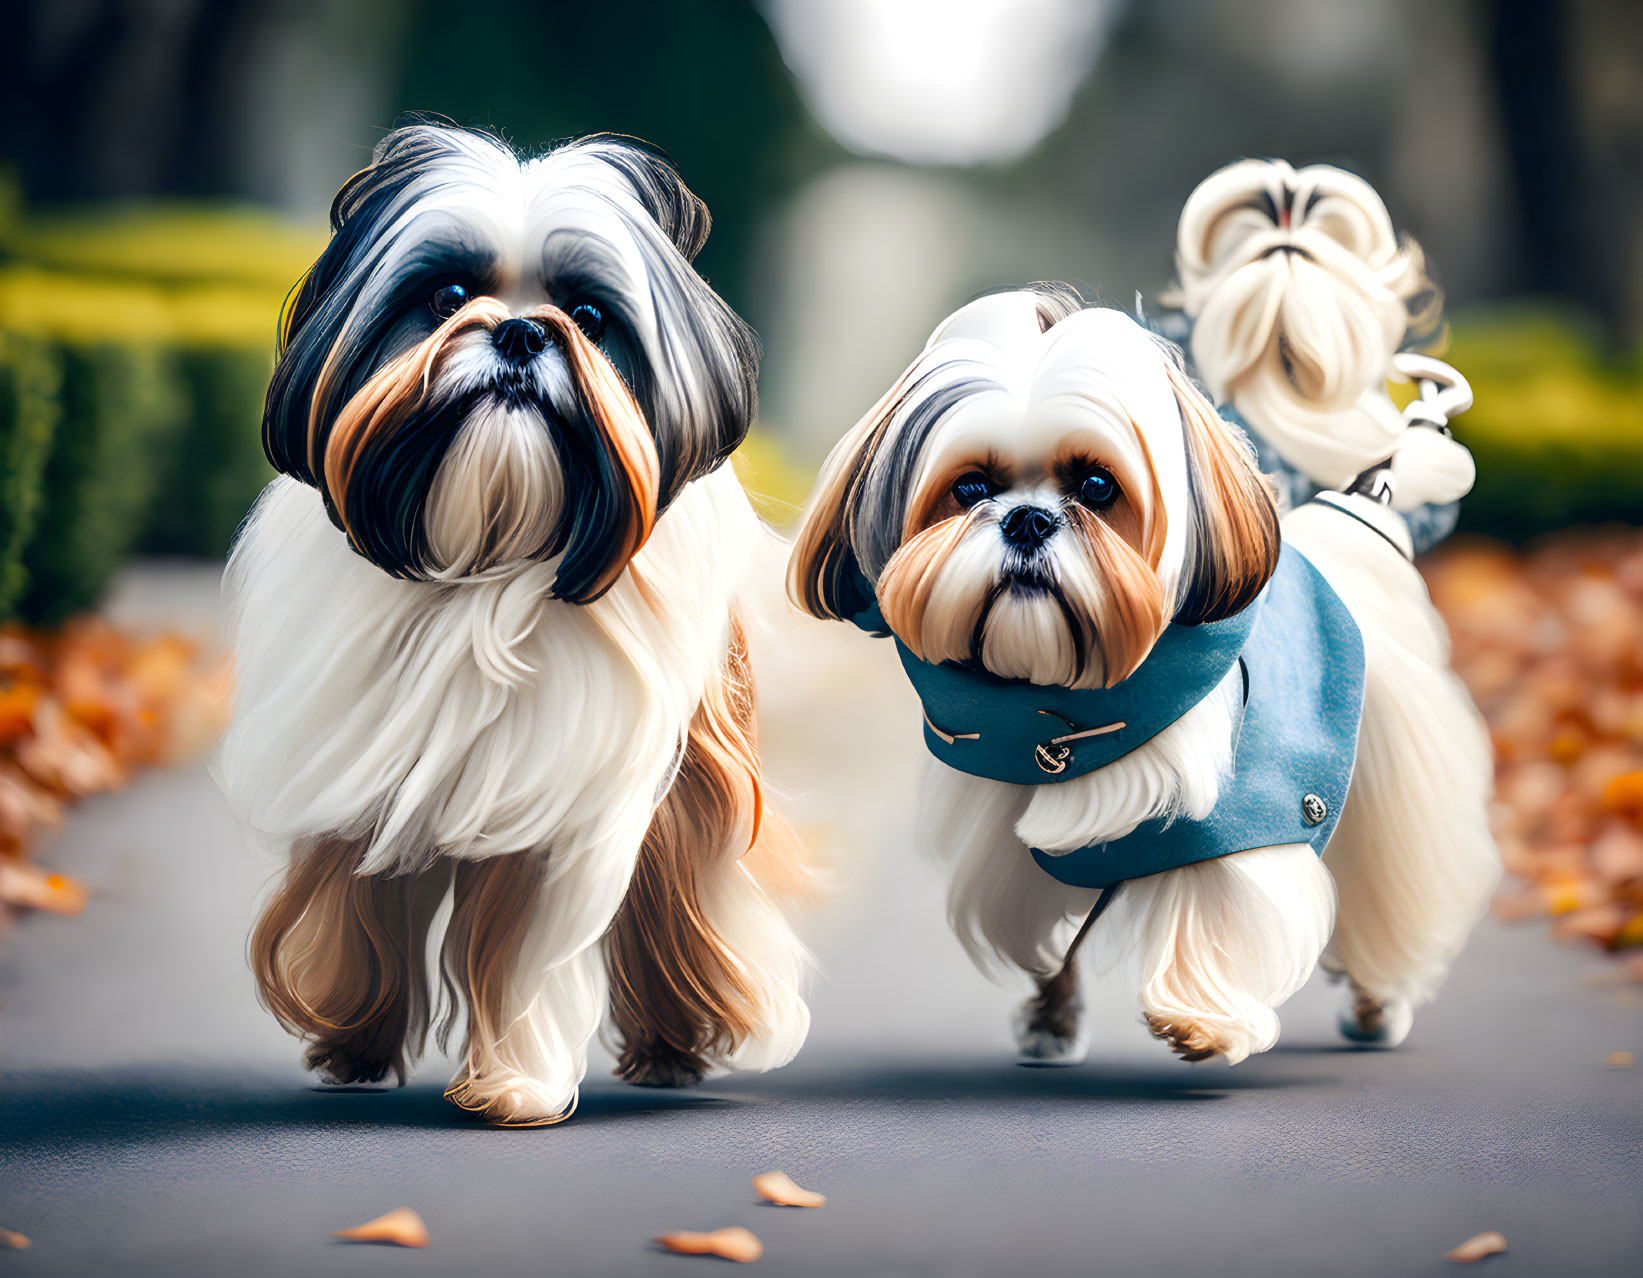 Two Shih Tzu dogs with bandanas walking among autumn leaves